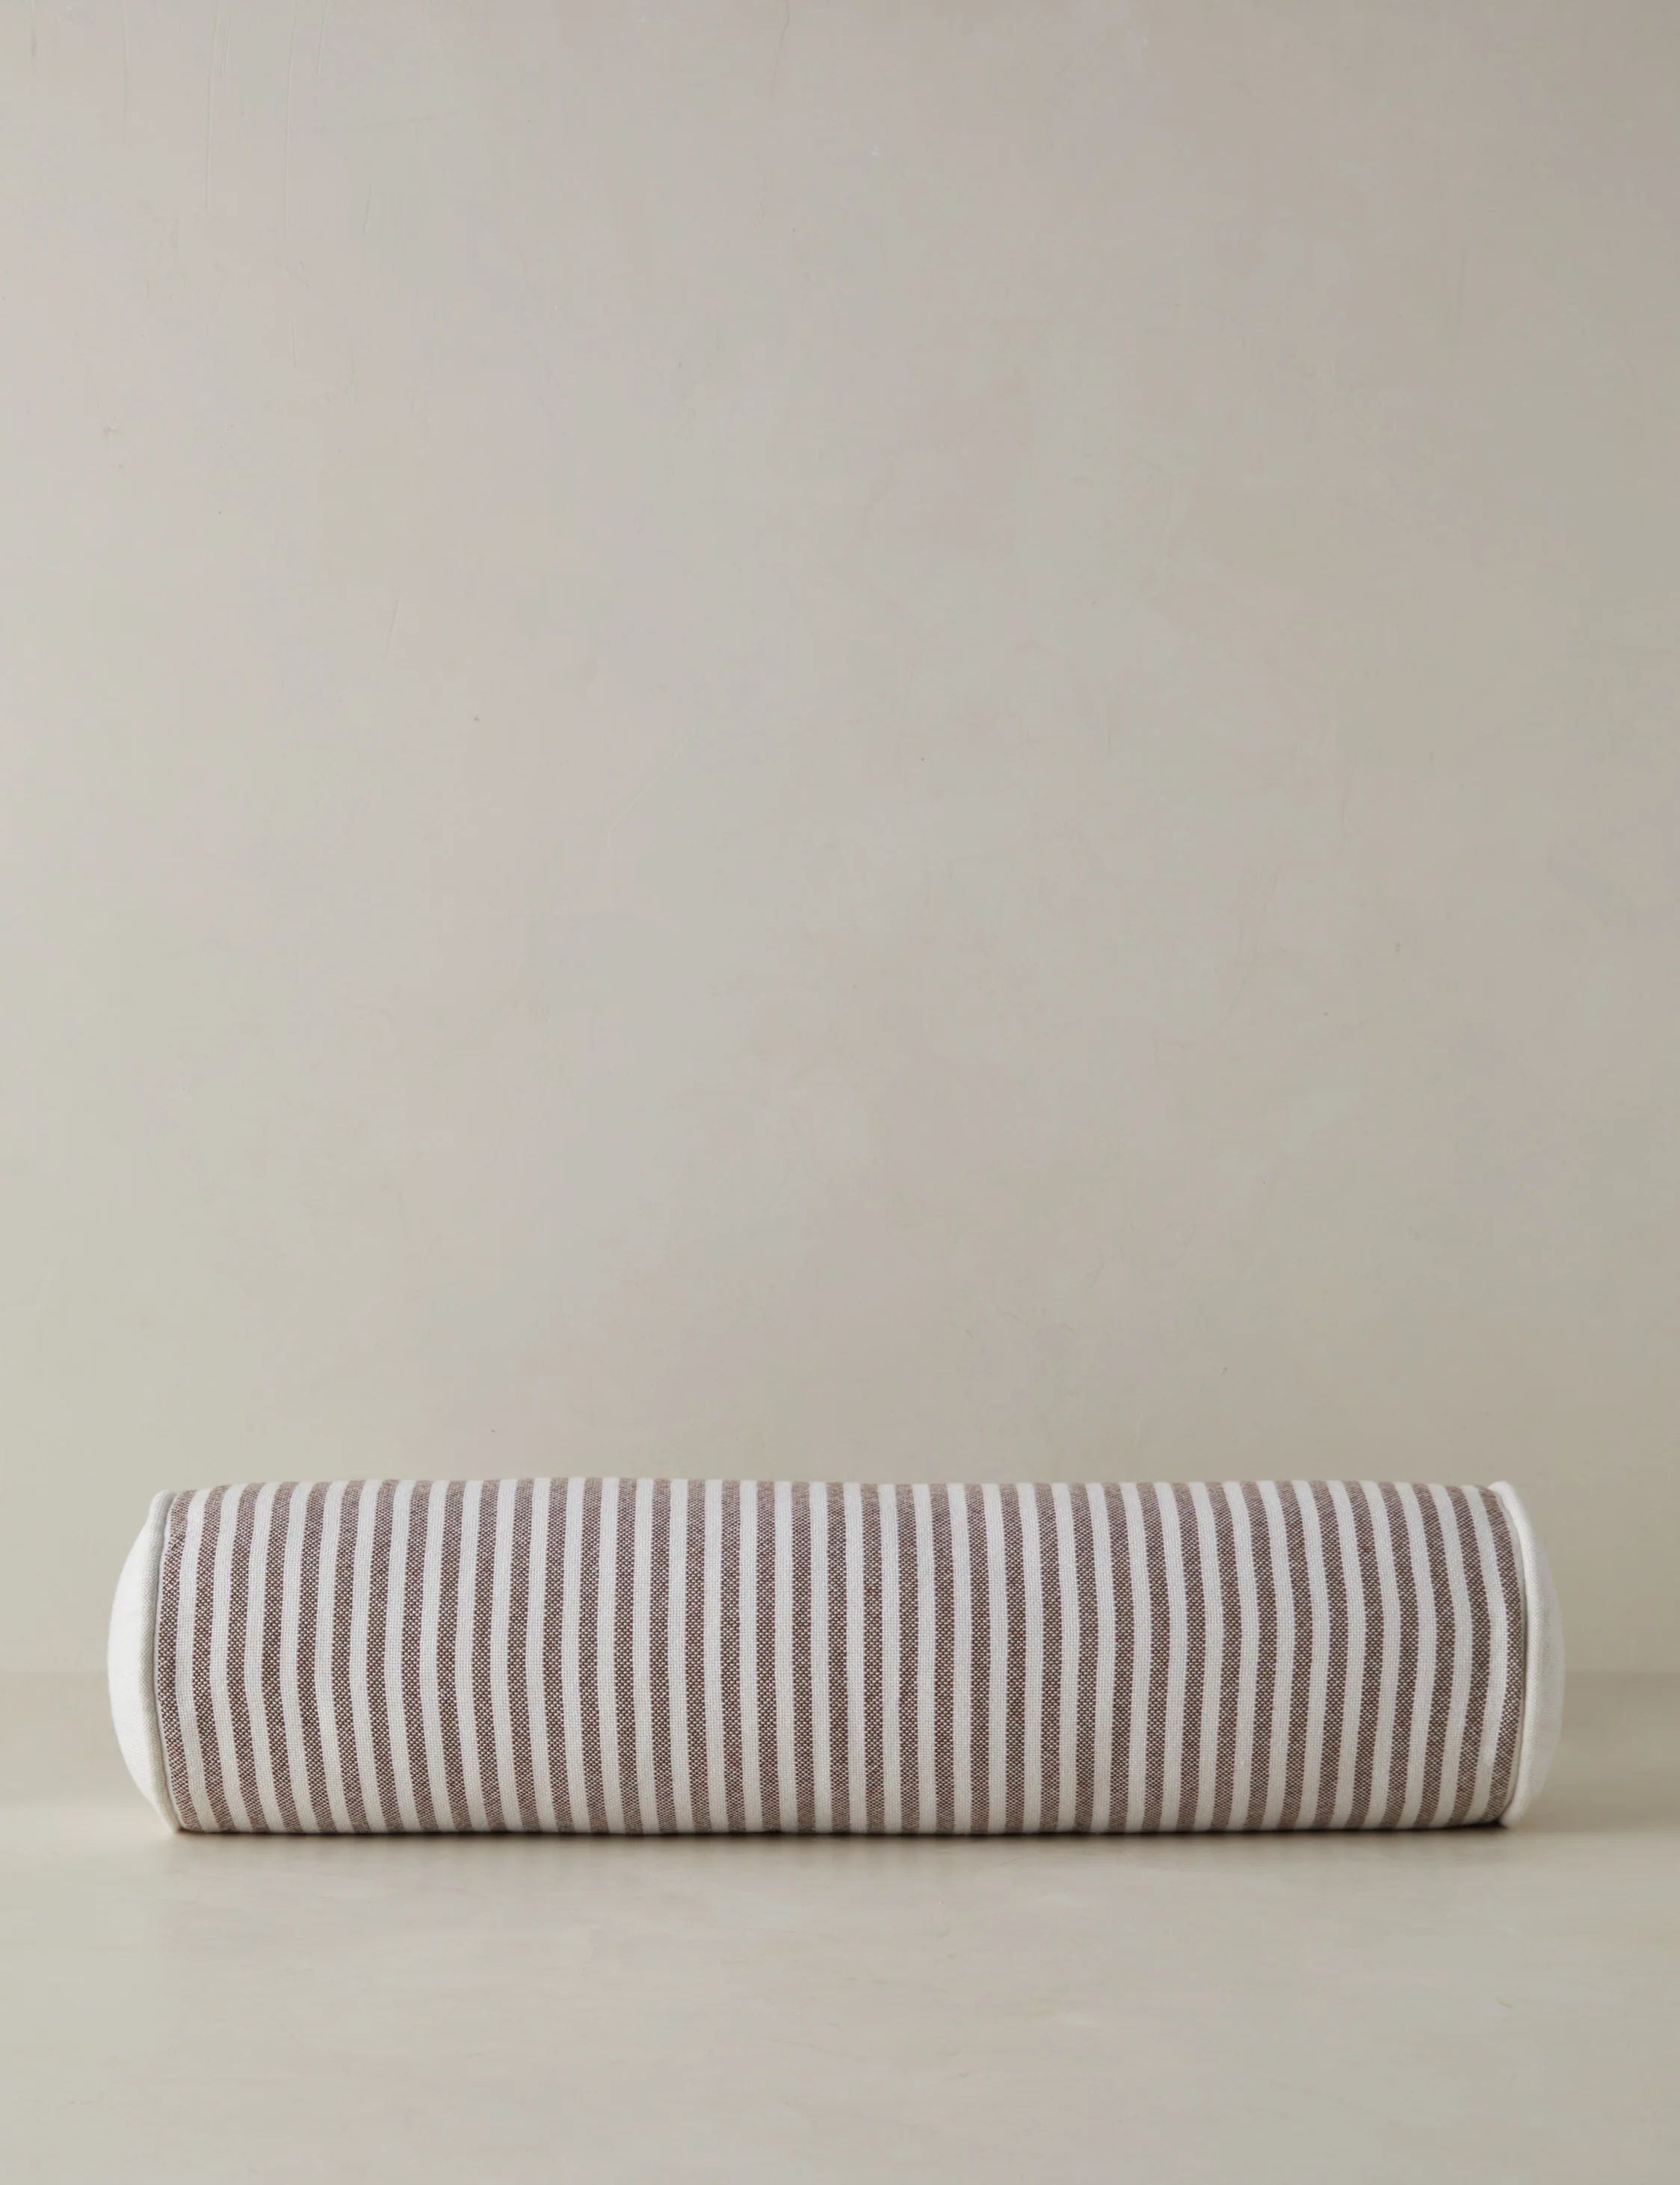 Littu Indoor / Outdoor Striped Bolster Pillow | Lulu and Georgia 